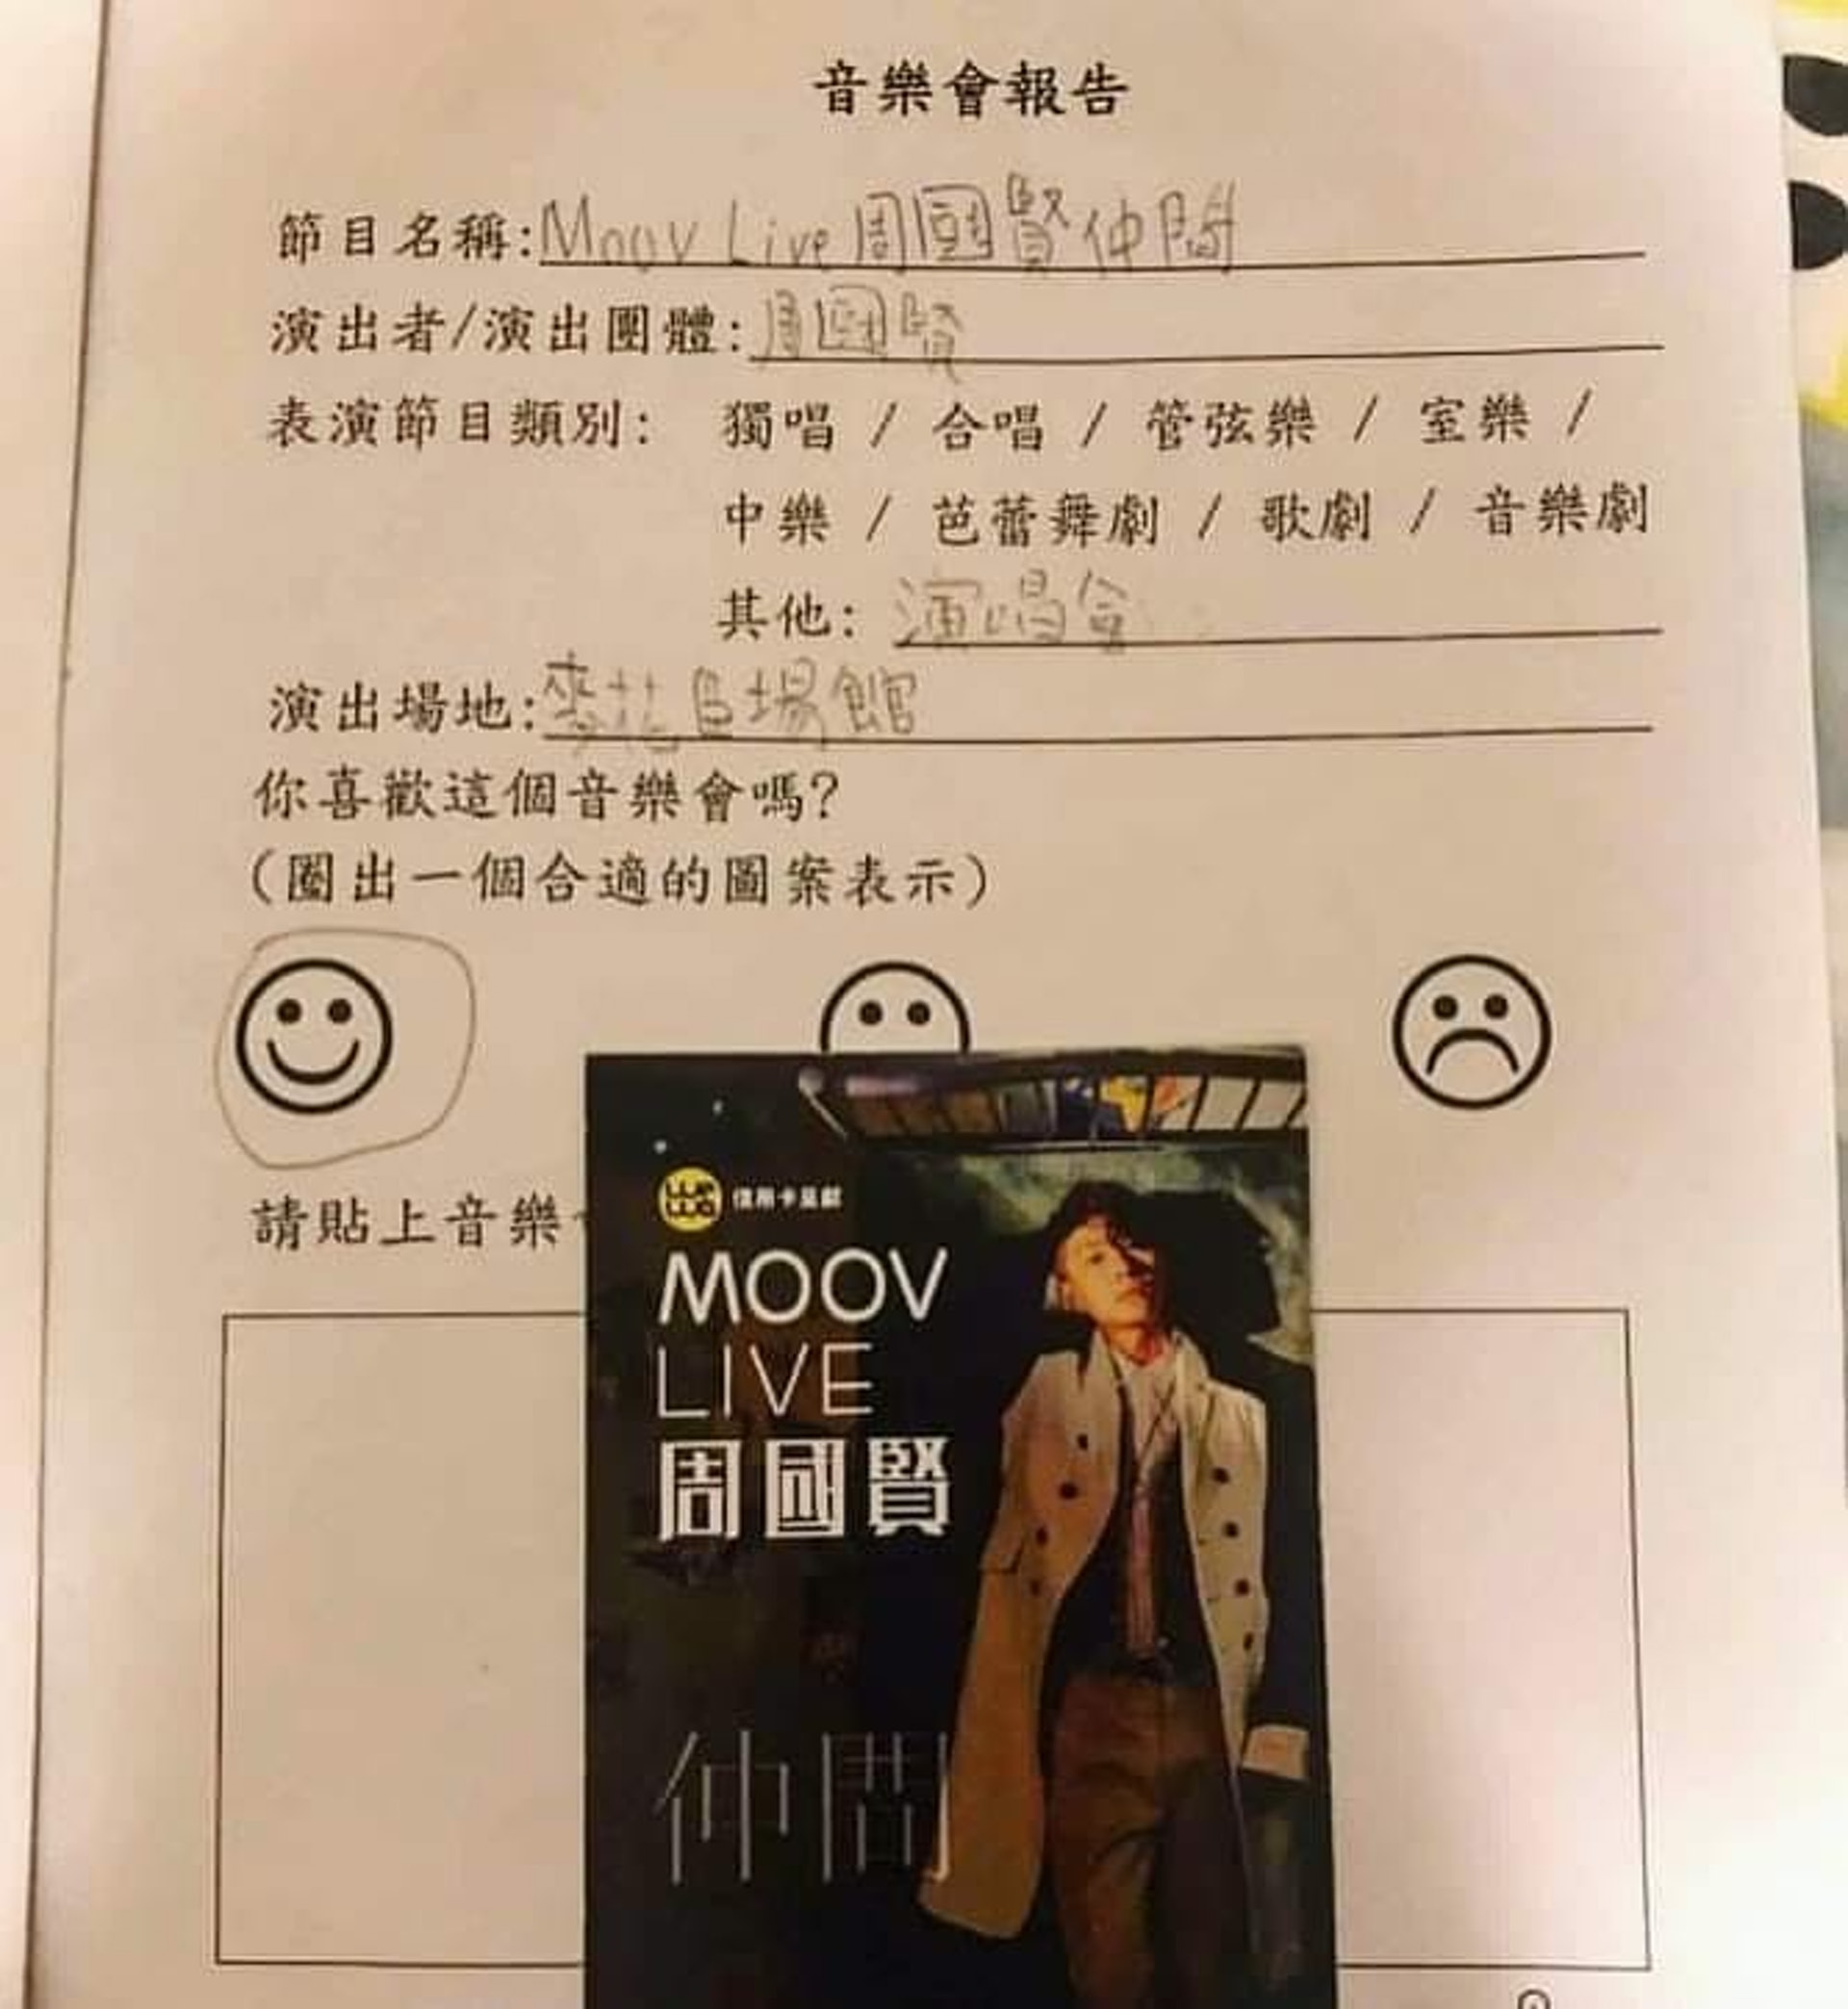 《MOOV LIVE 周國賢》音樂會報告。（作者提供）